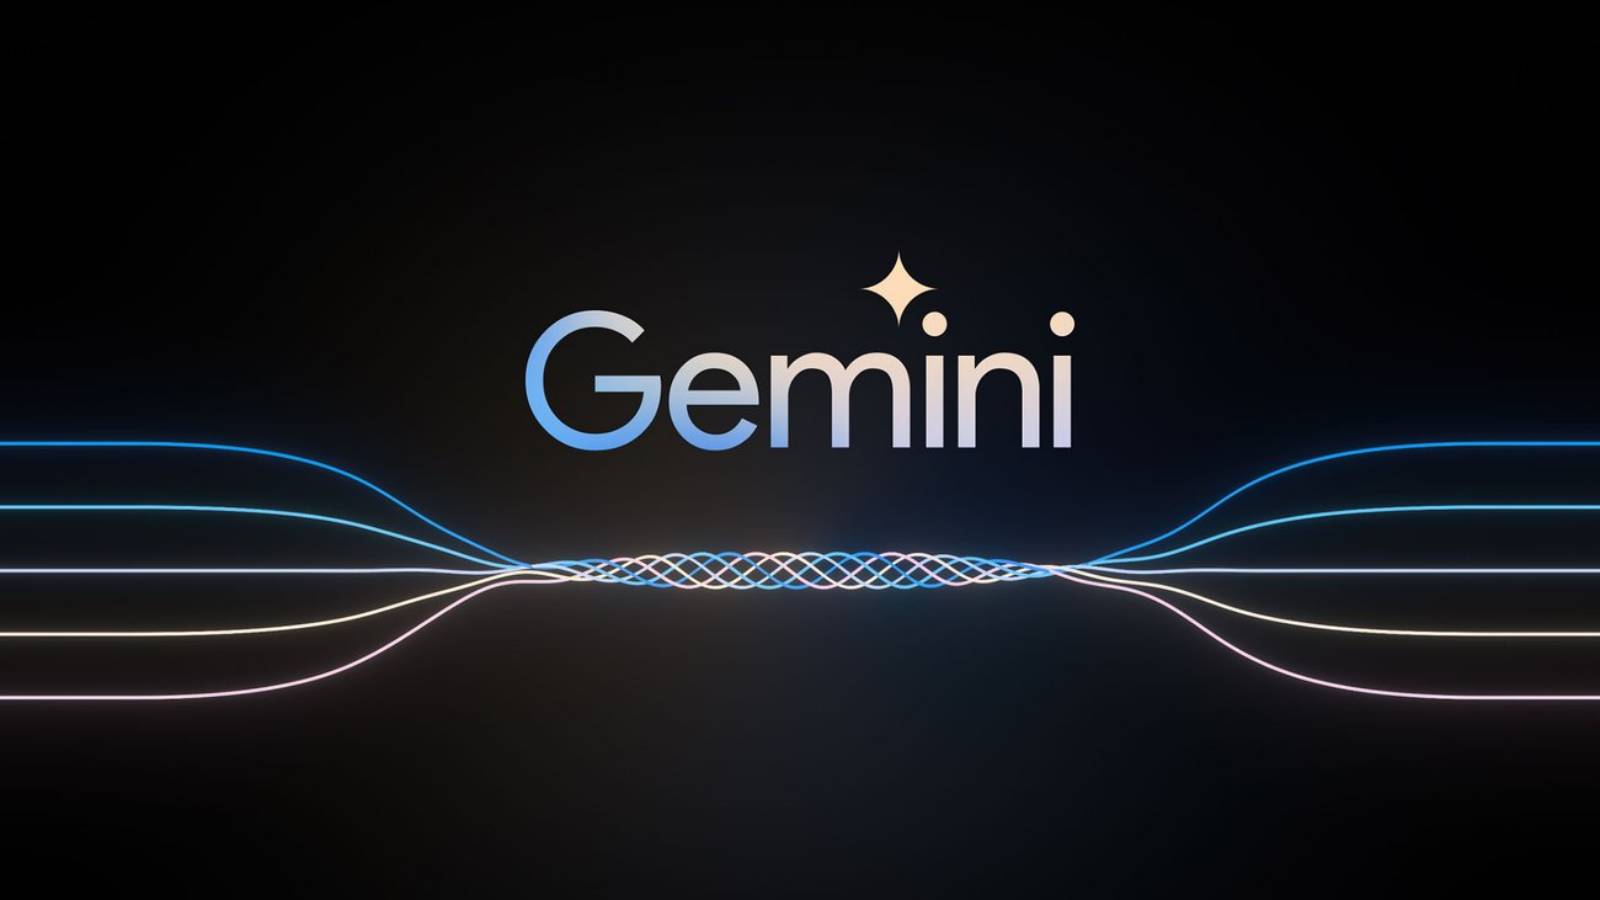 Google OGROMNE ZMIANY Android Gemini Sztuczna inteligencja